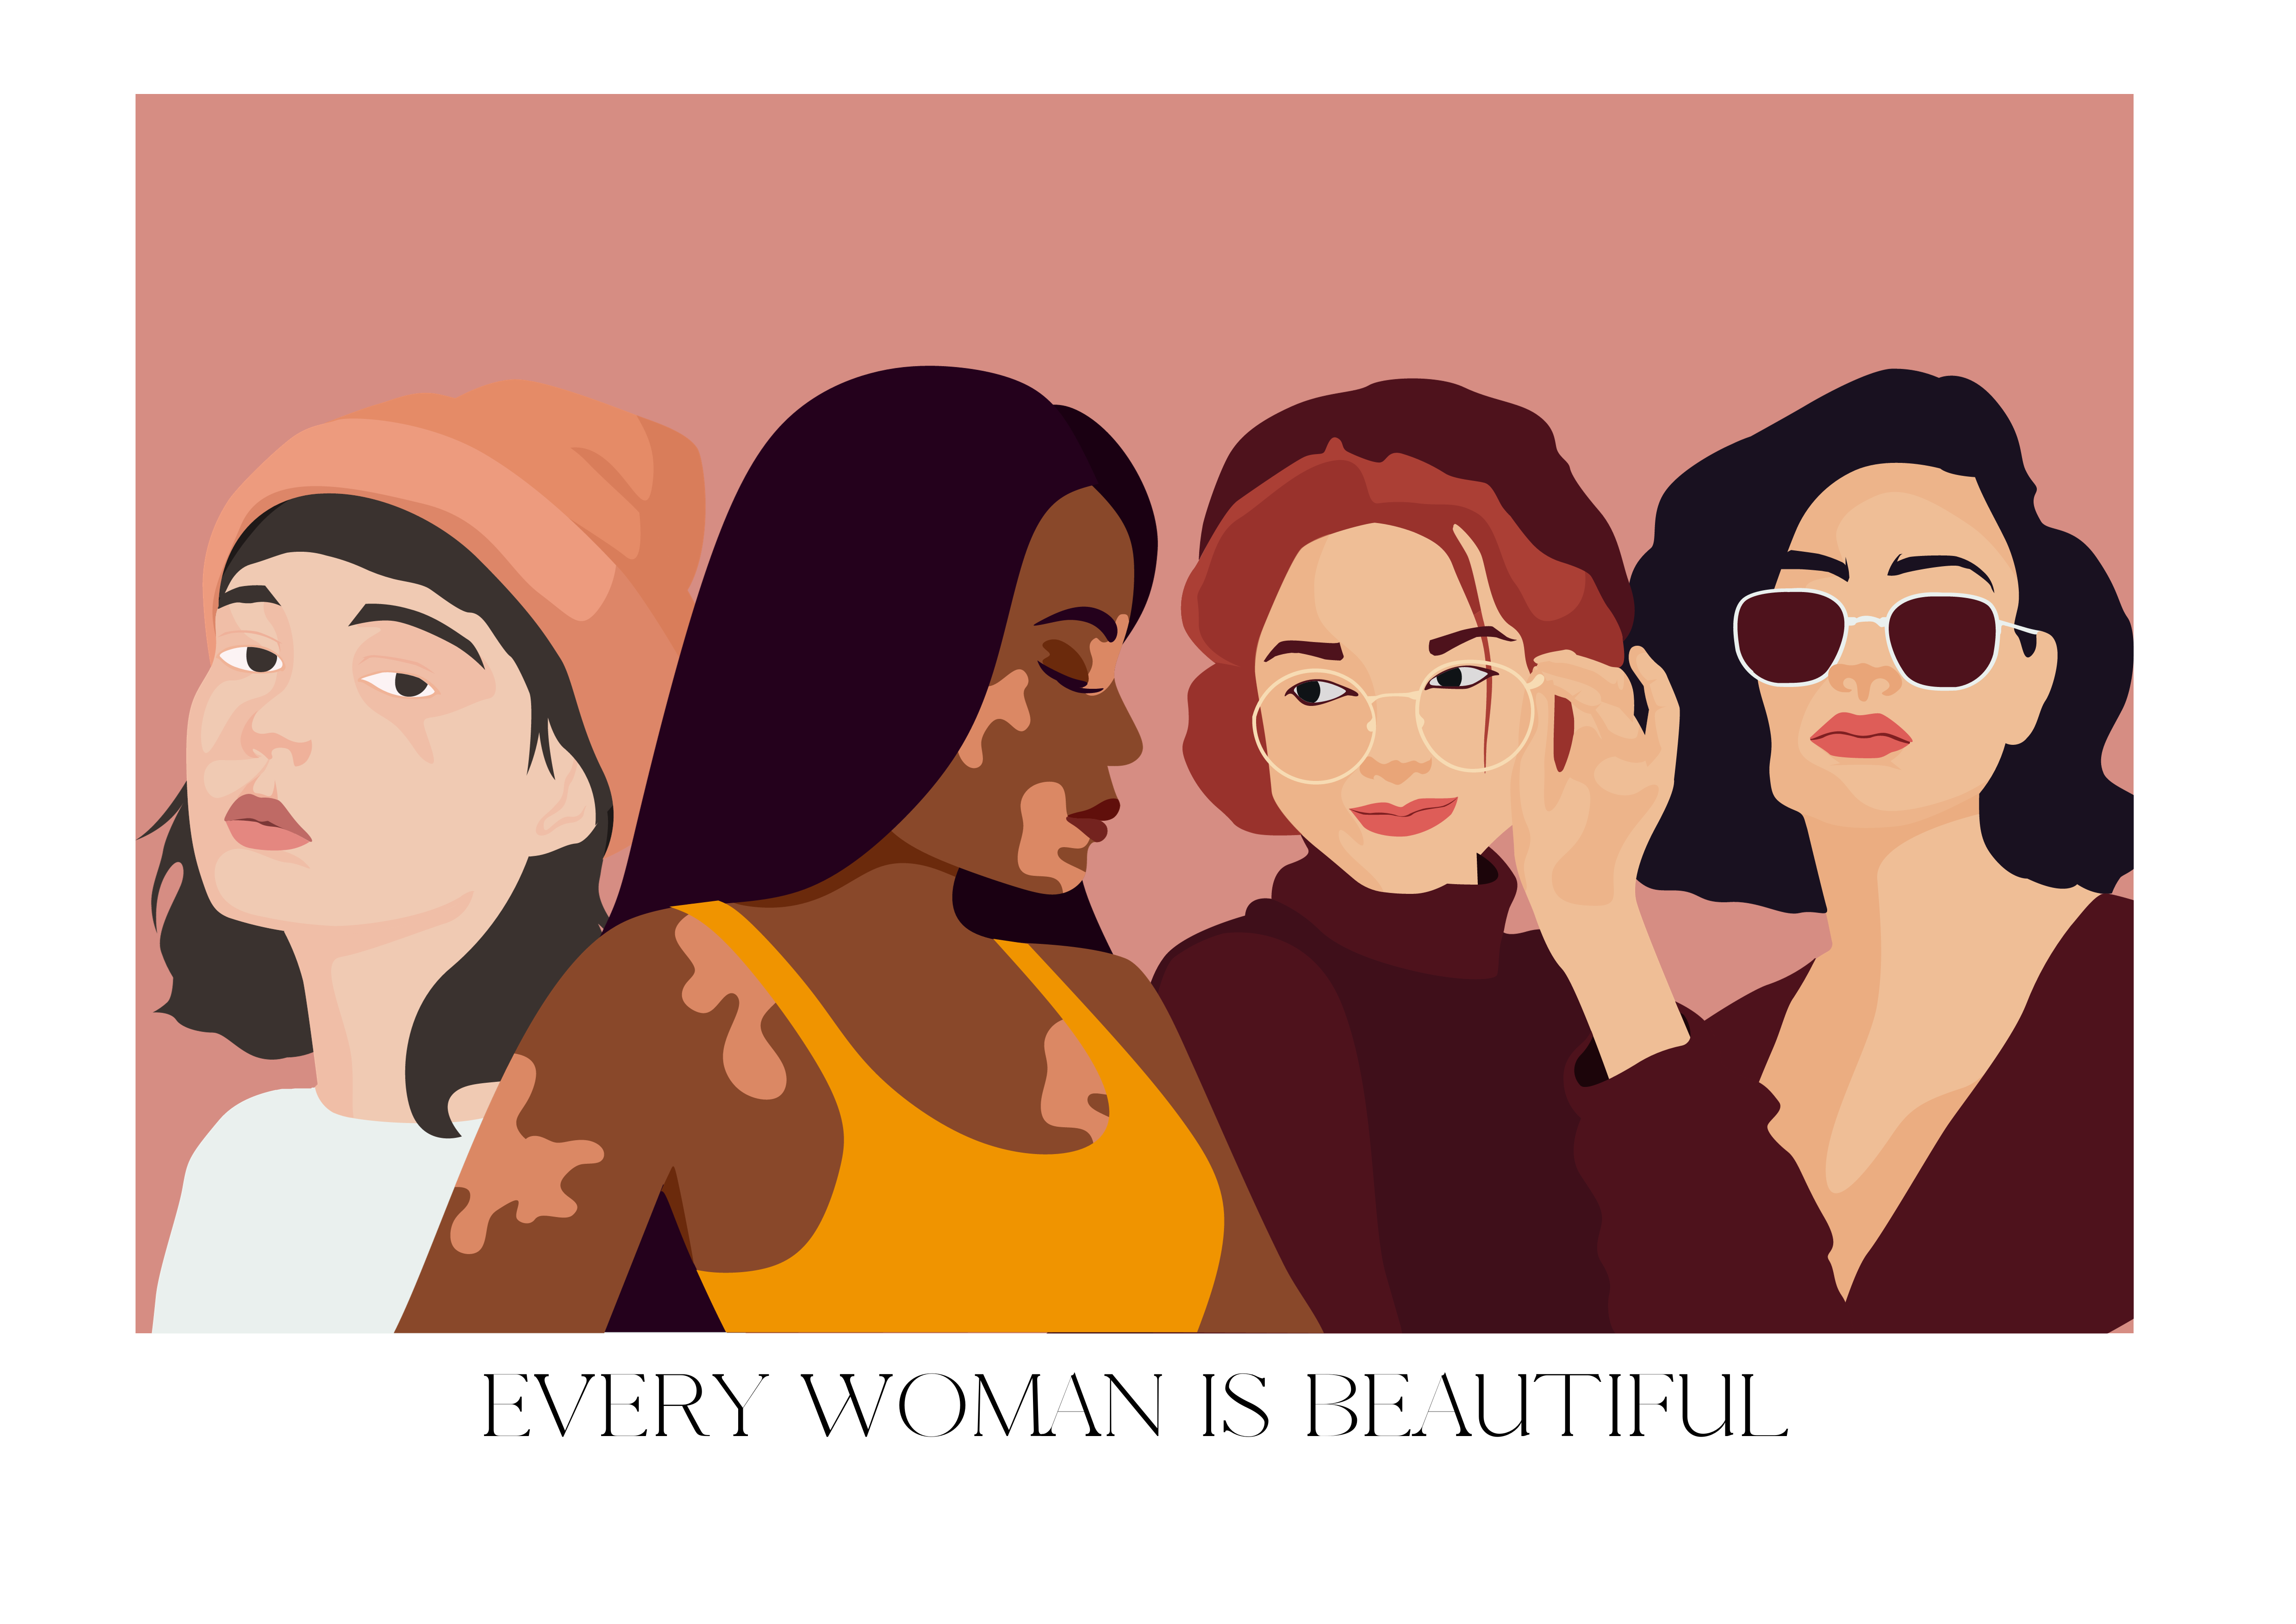 EVERY WOMAN IS BEAUTIFUL